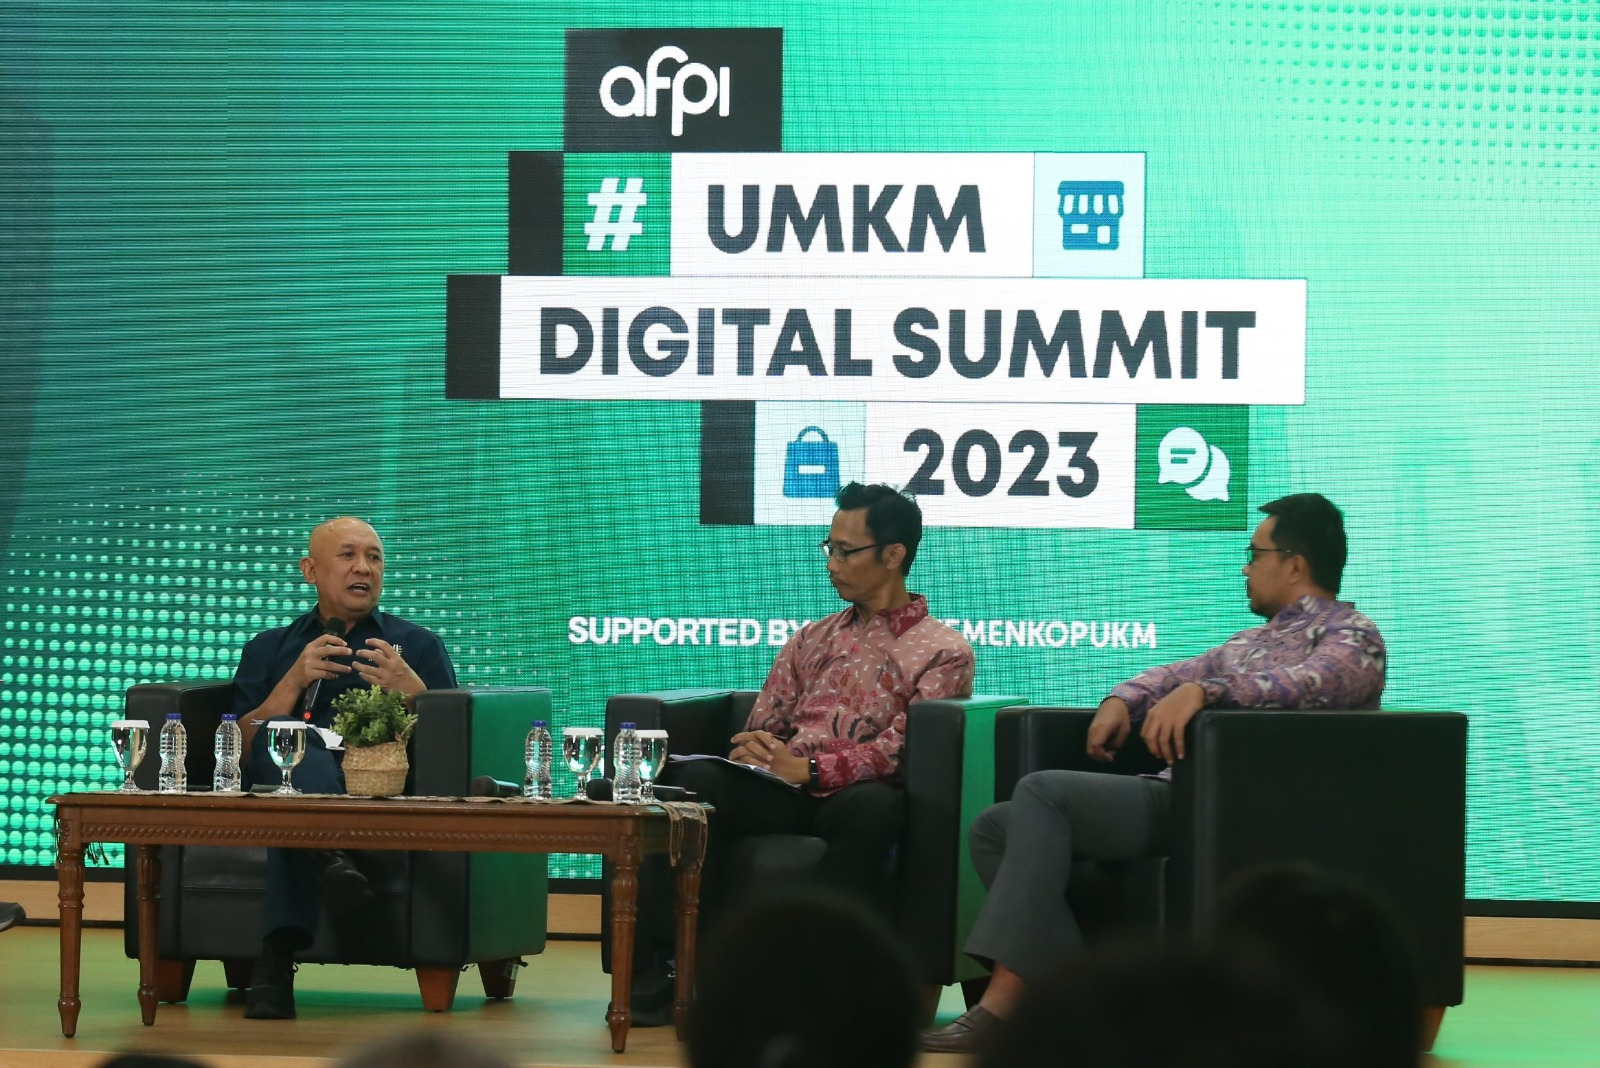 AFPI UMKM Digital Summit 2023